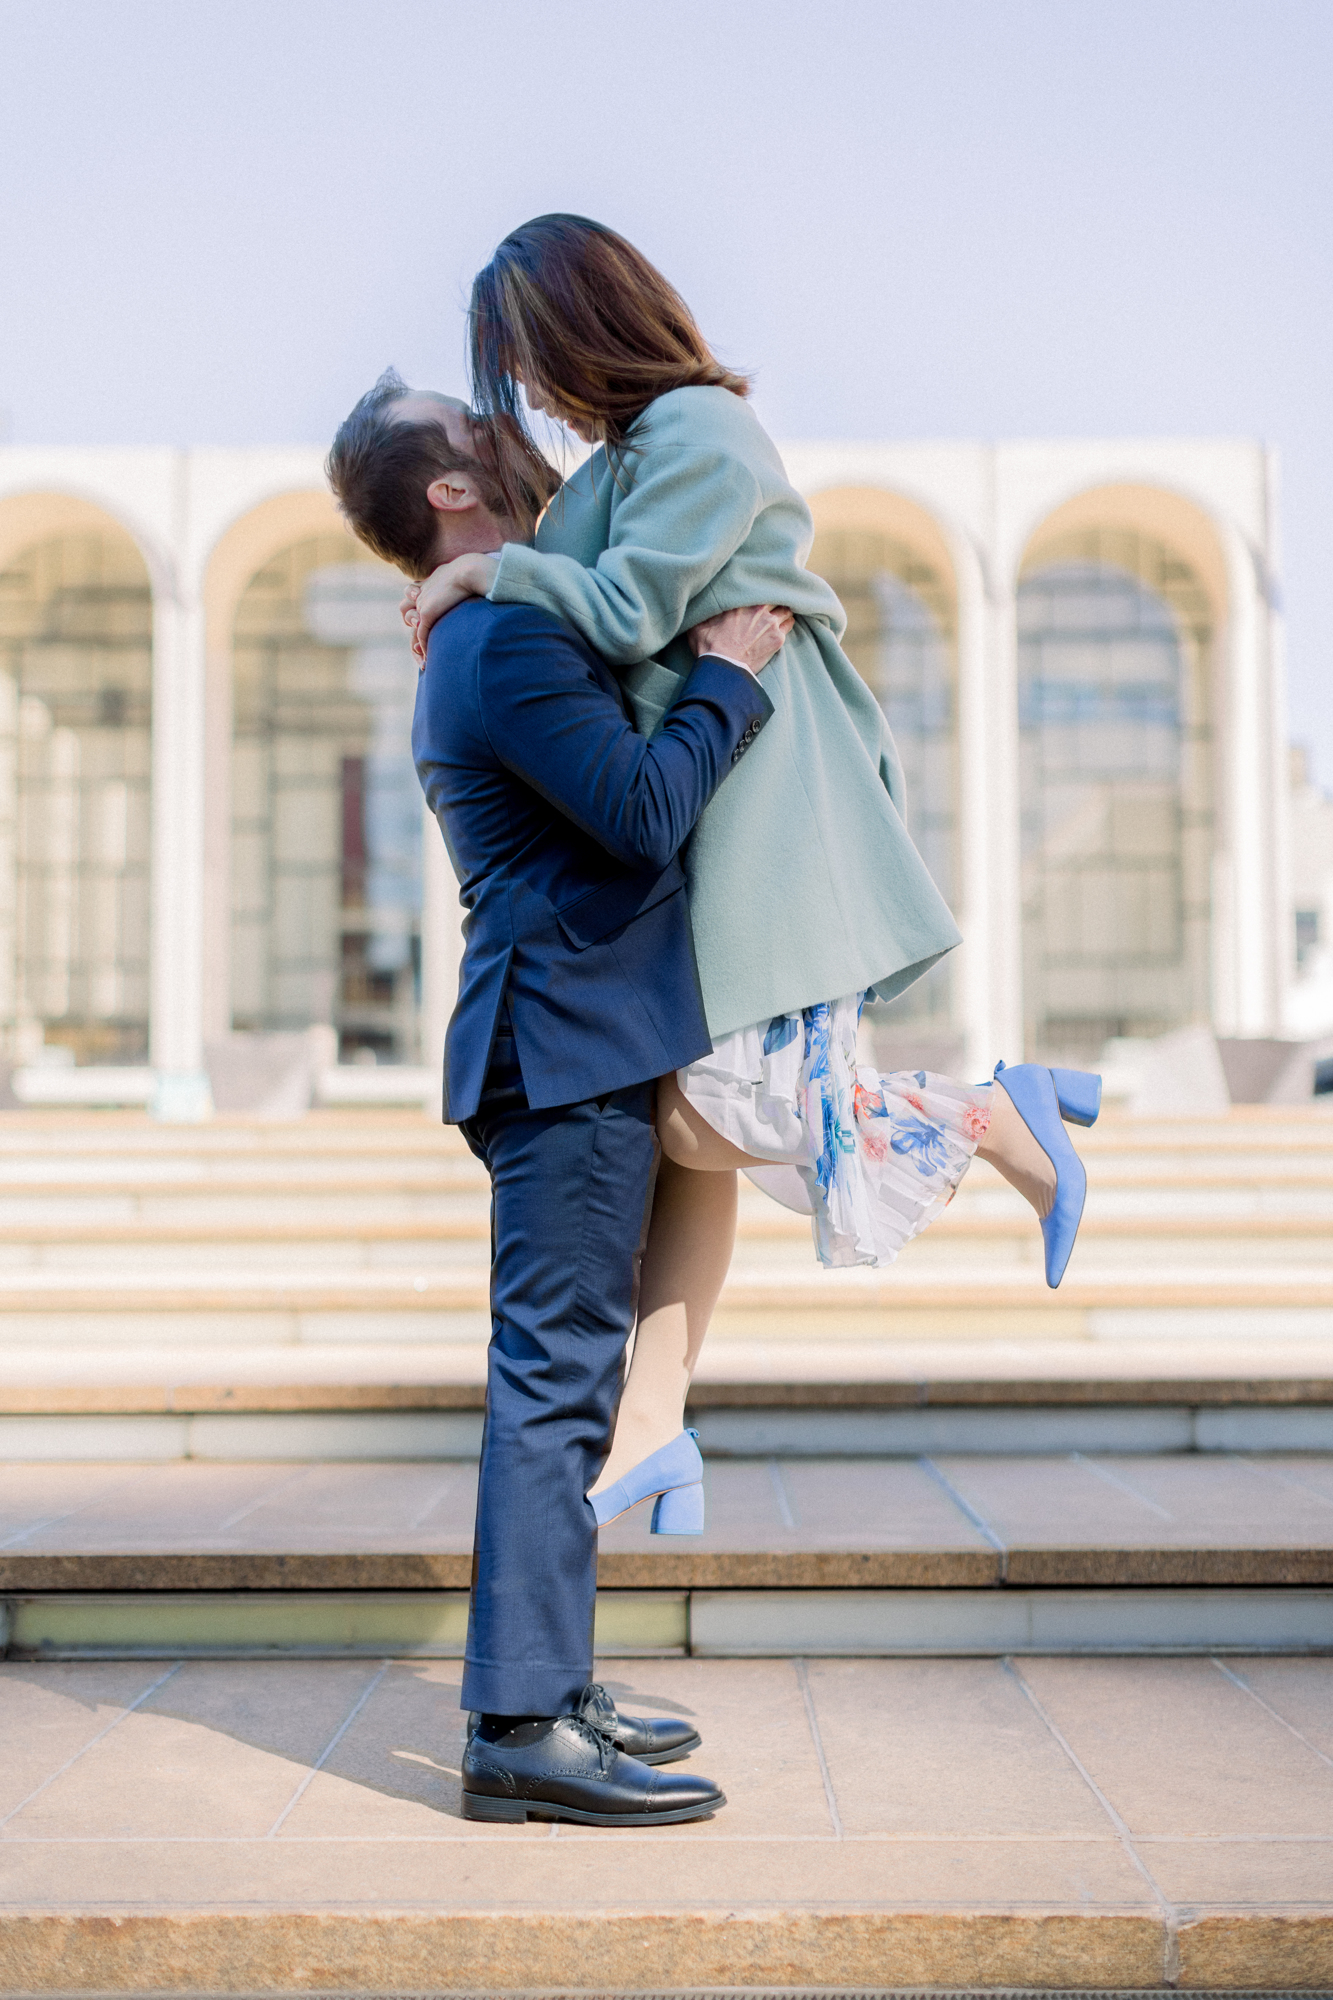 Joyful Central Park Wedding Photos in Wintery New York